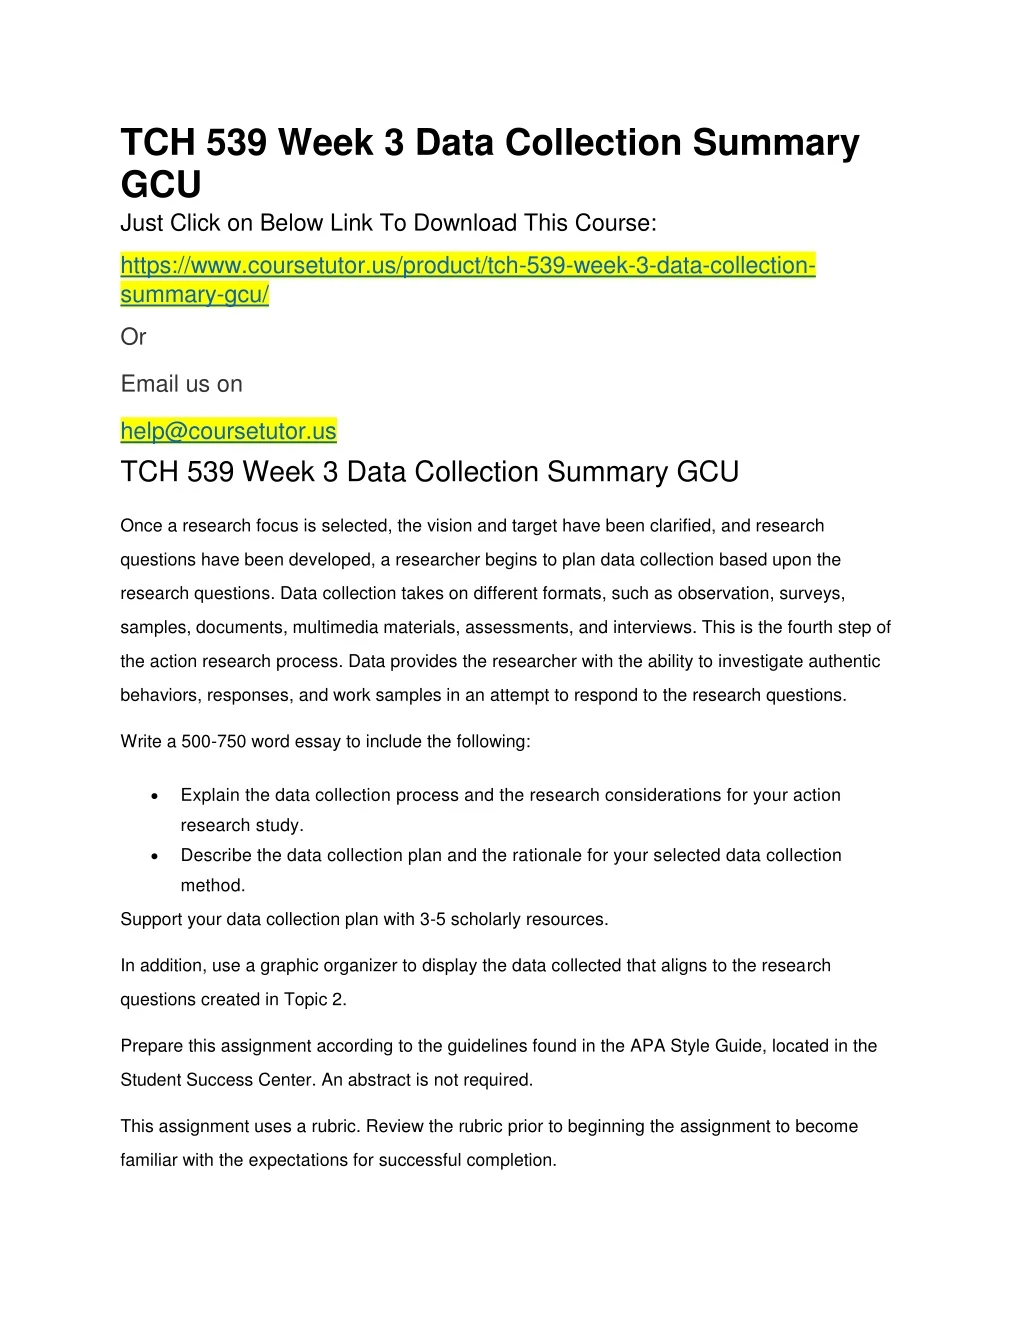 tch 539 week 3 data collection summary gcu just